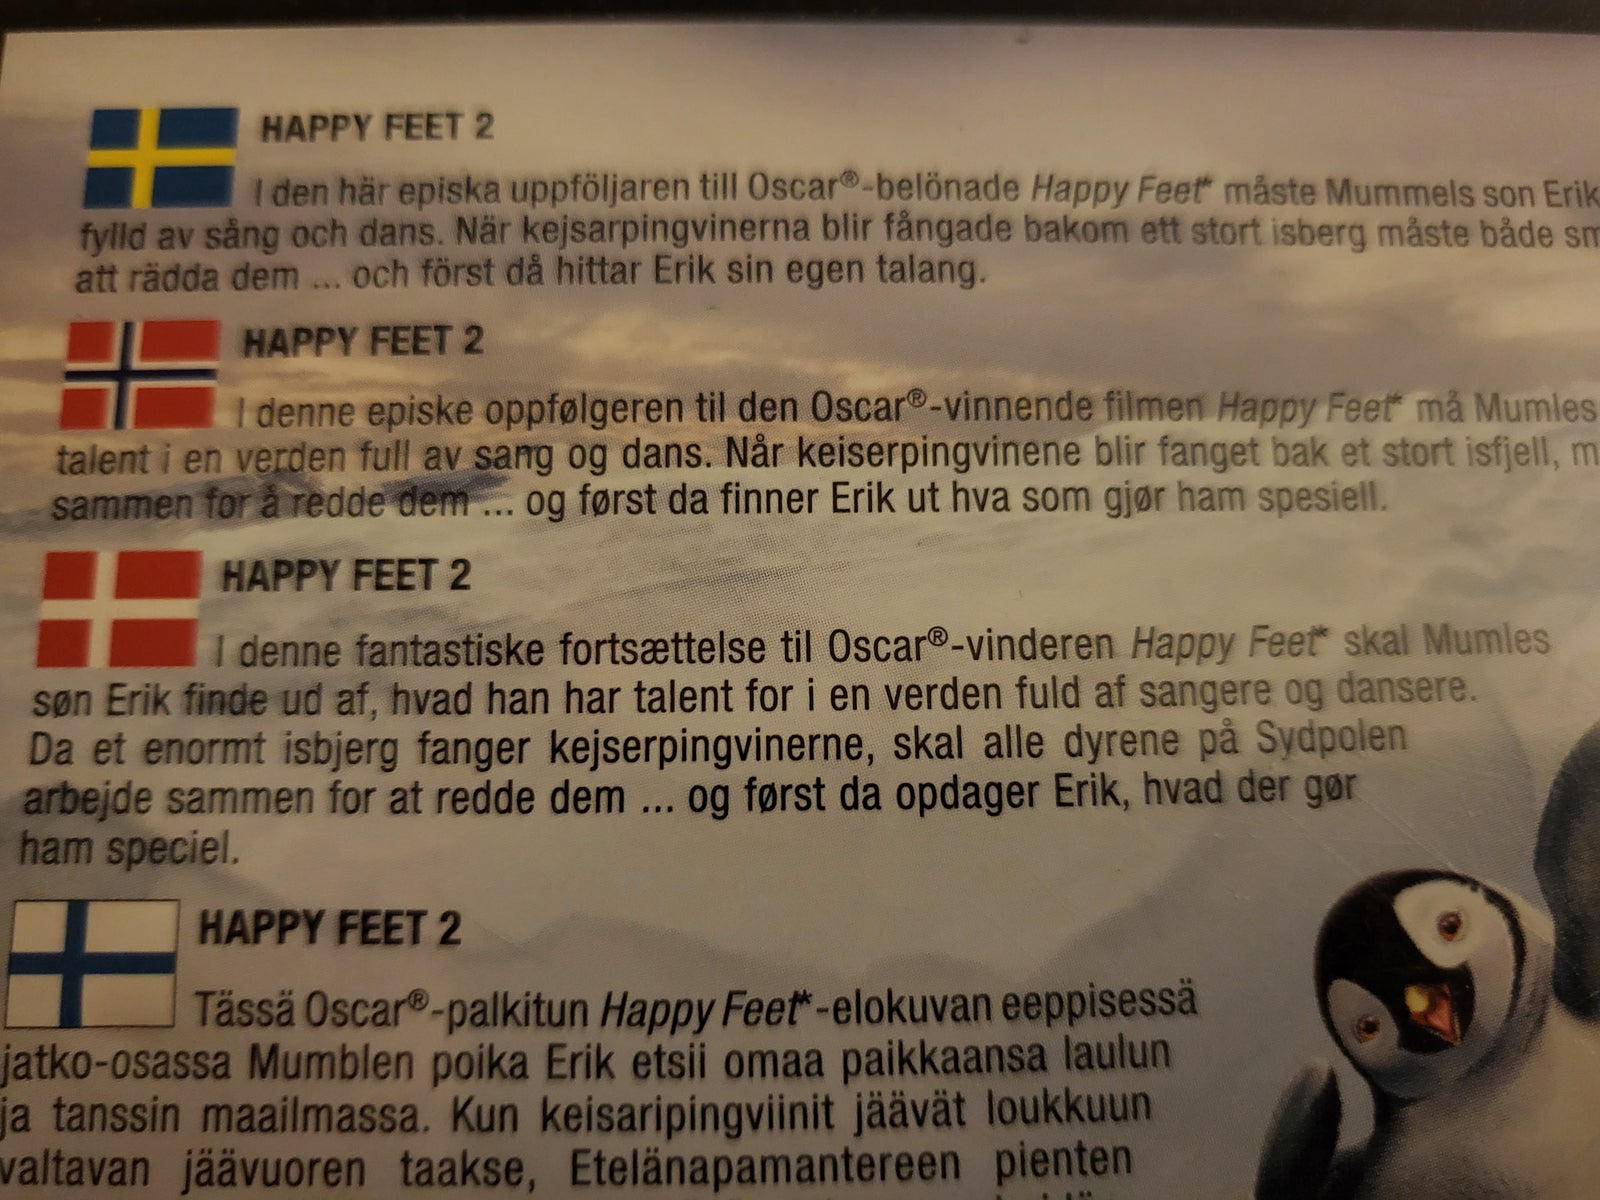 Happy Feet 2, DVD, animation